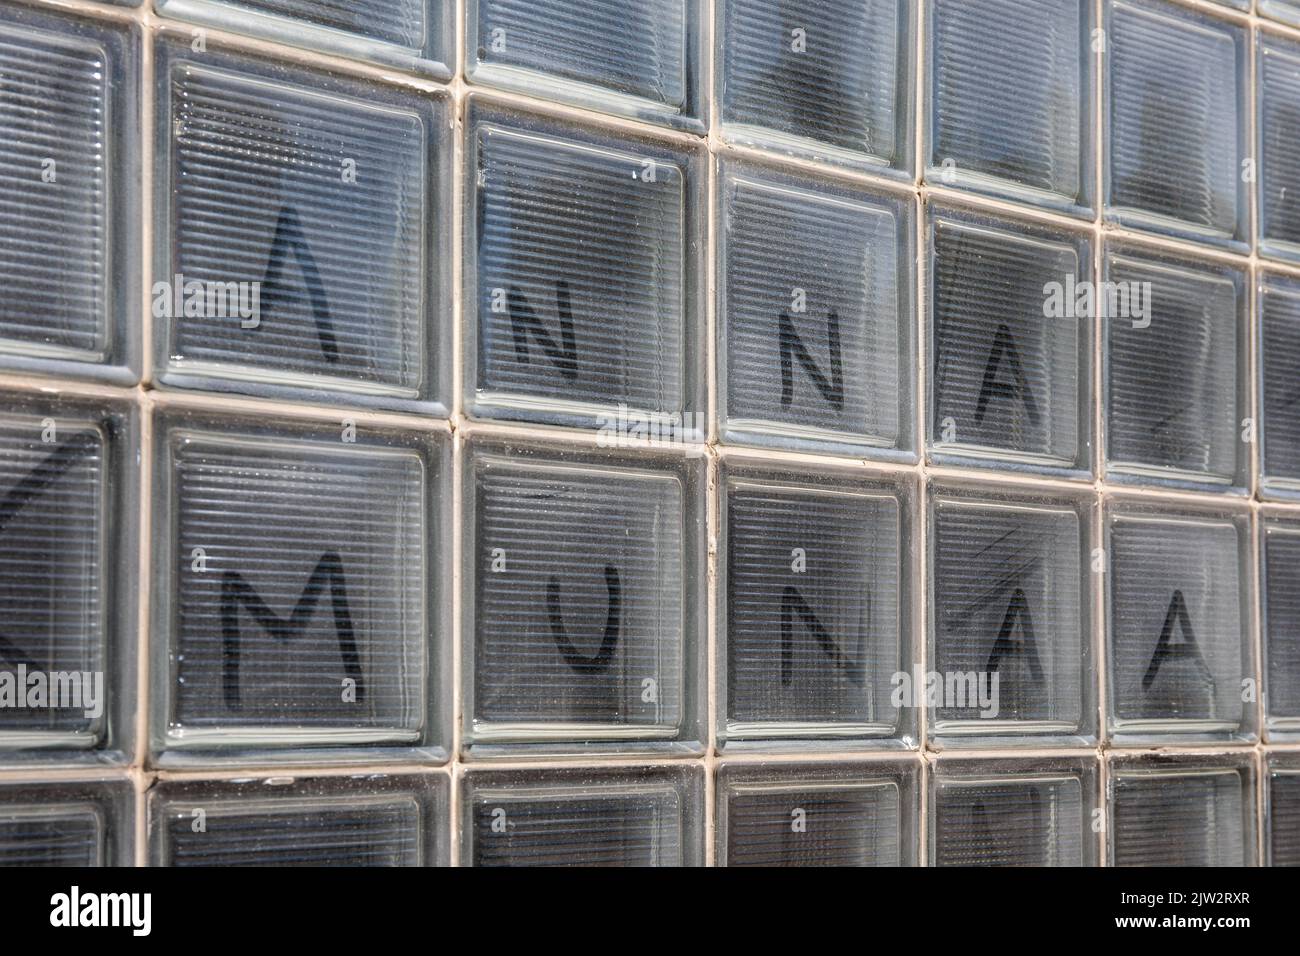 Anna munaa. Text written on dusty or dirty glass block window in Helsinki, Finland. Stock Photo